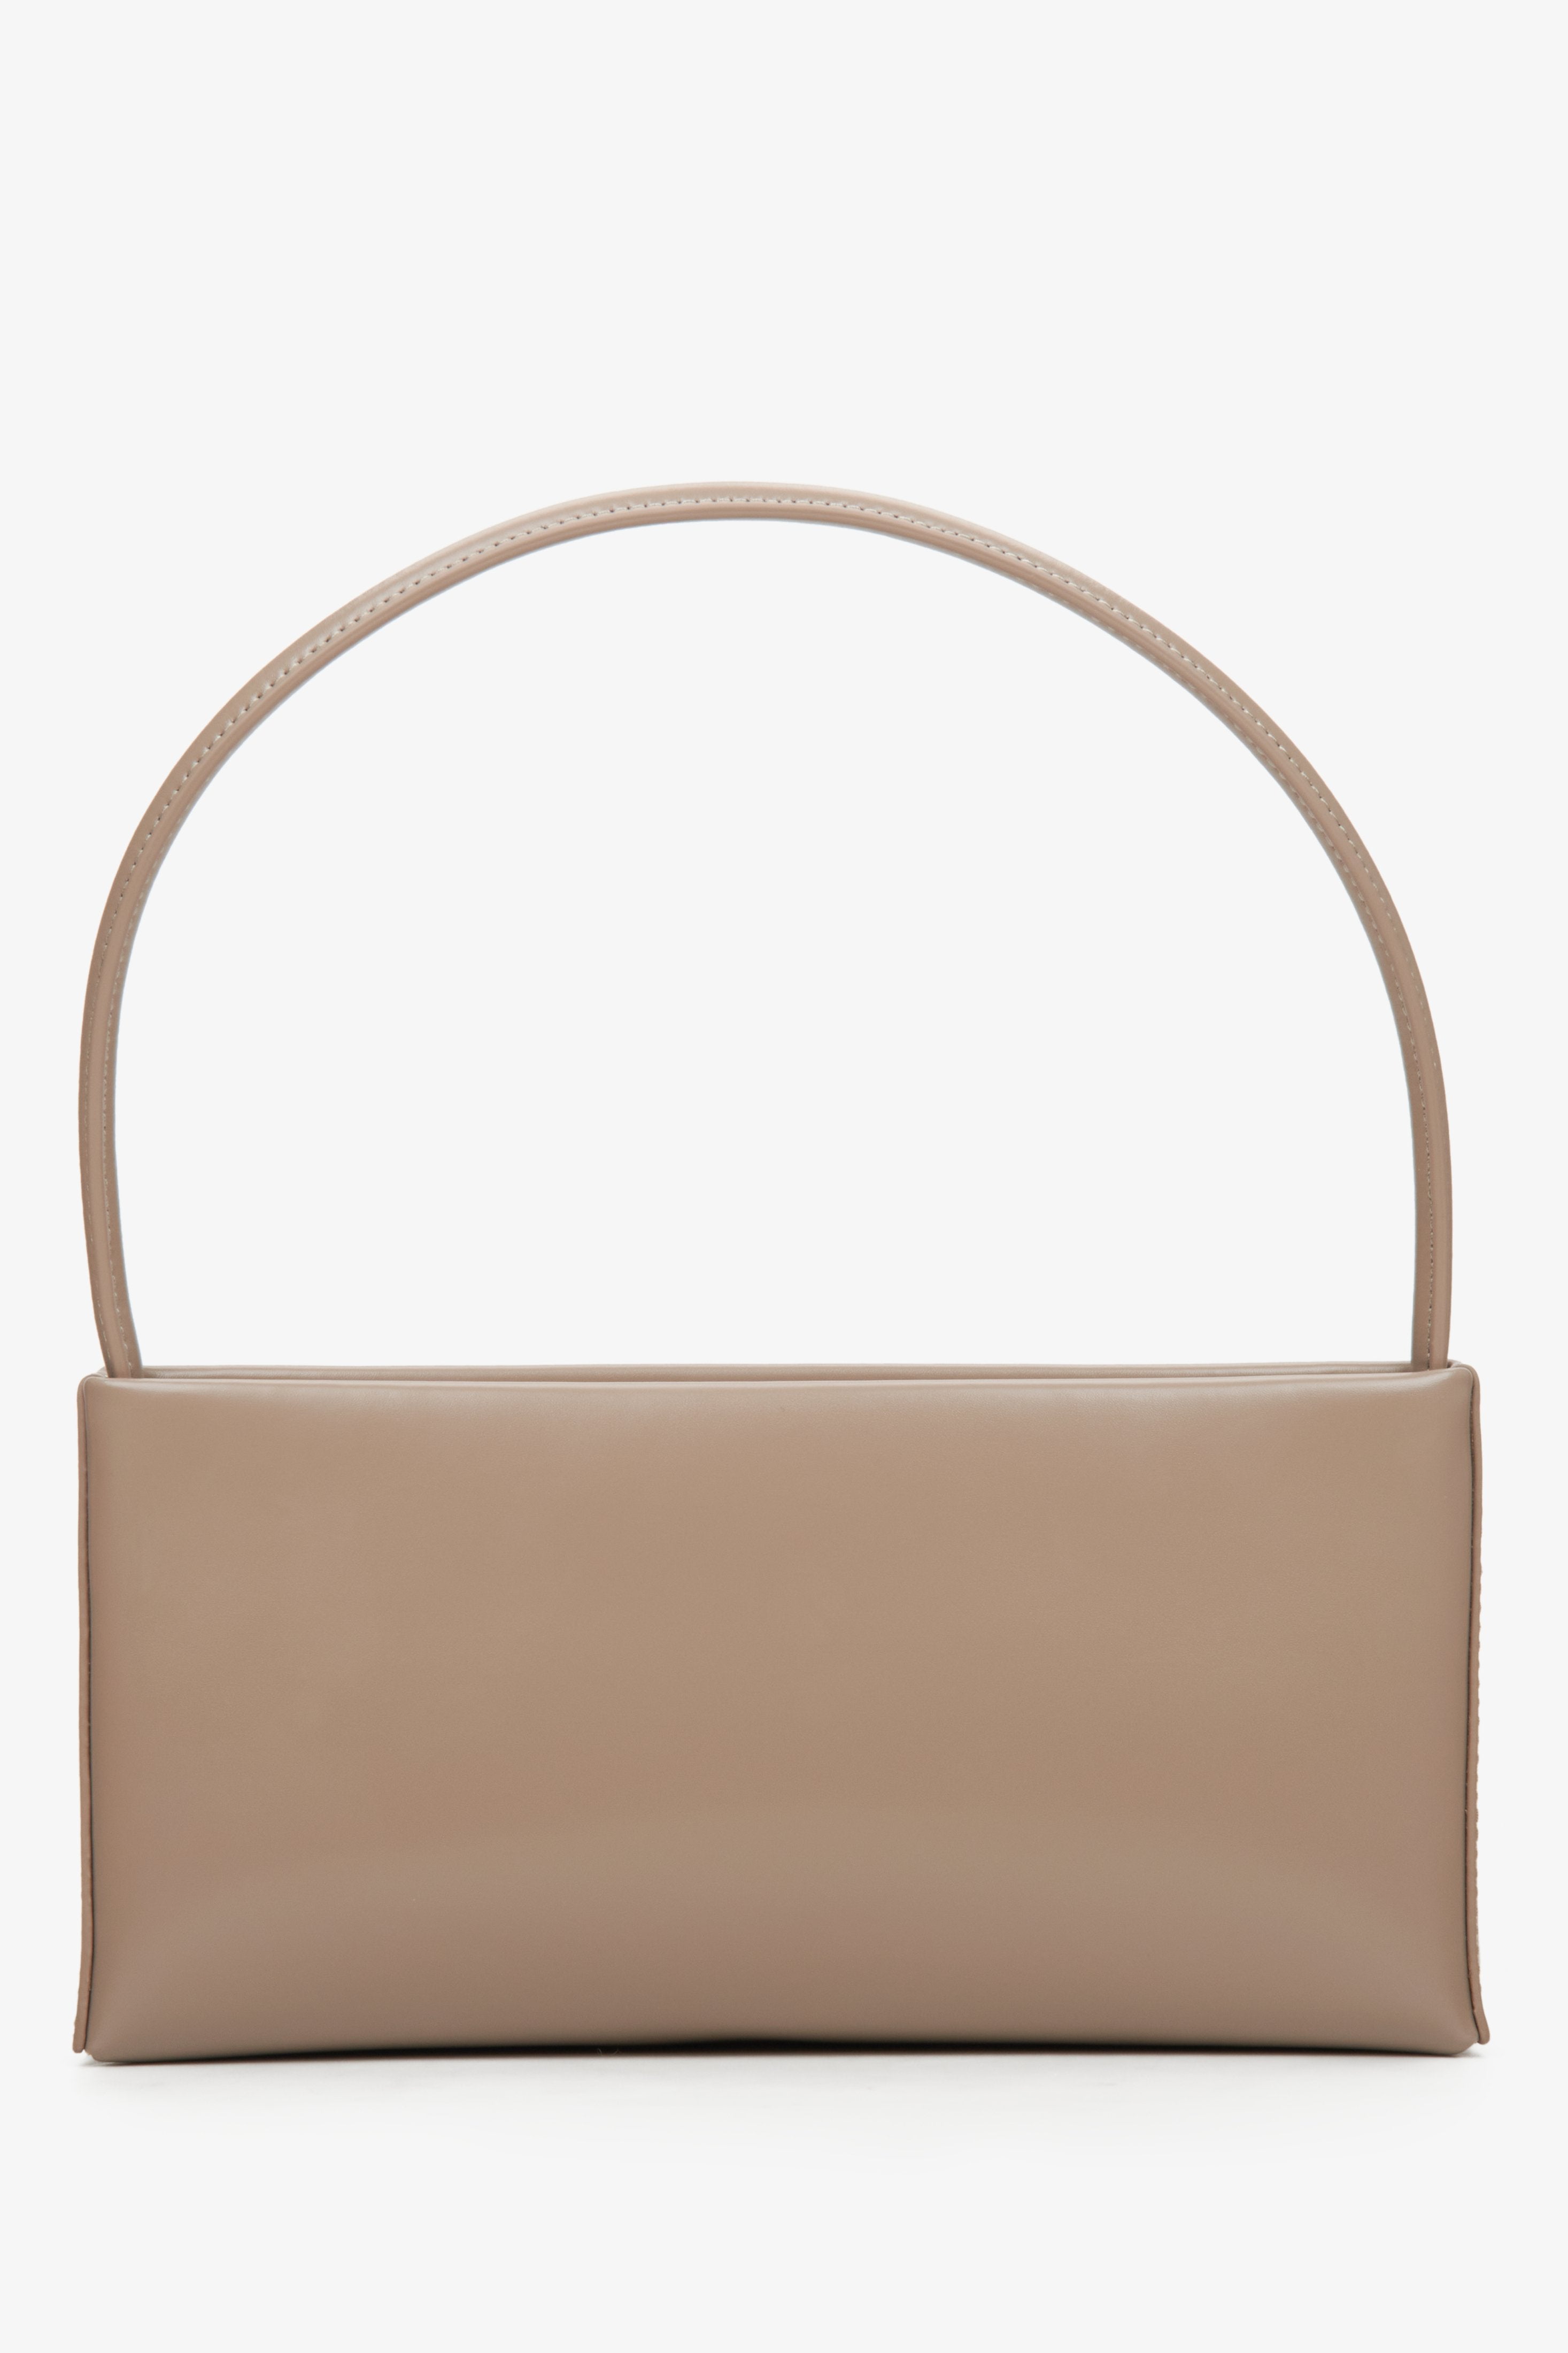 Sand beige leather women's handbag - reverse.